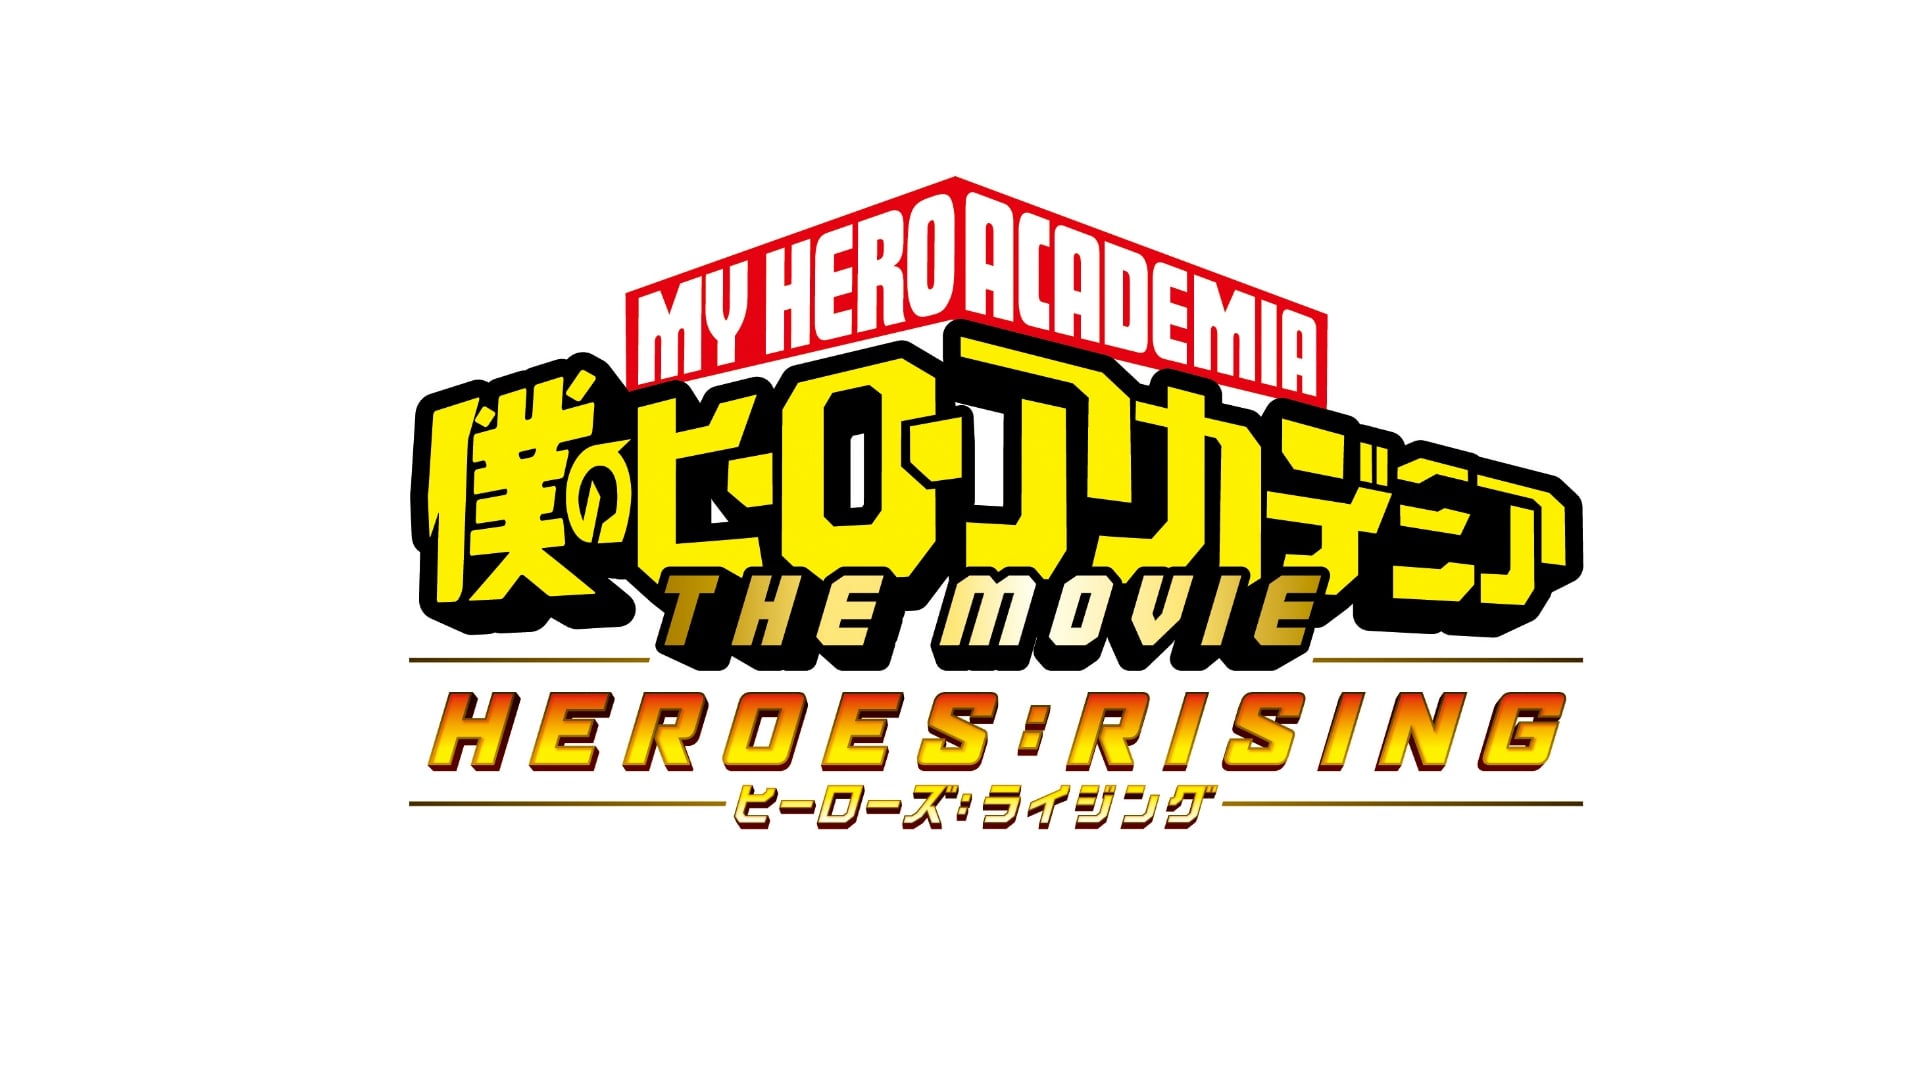 2019 My Hero Academia: Heroes Rising